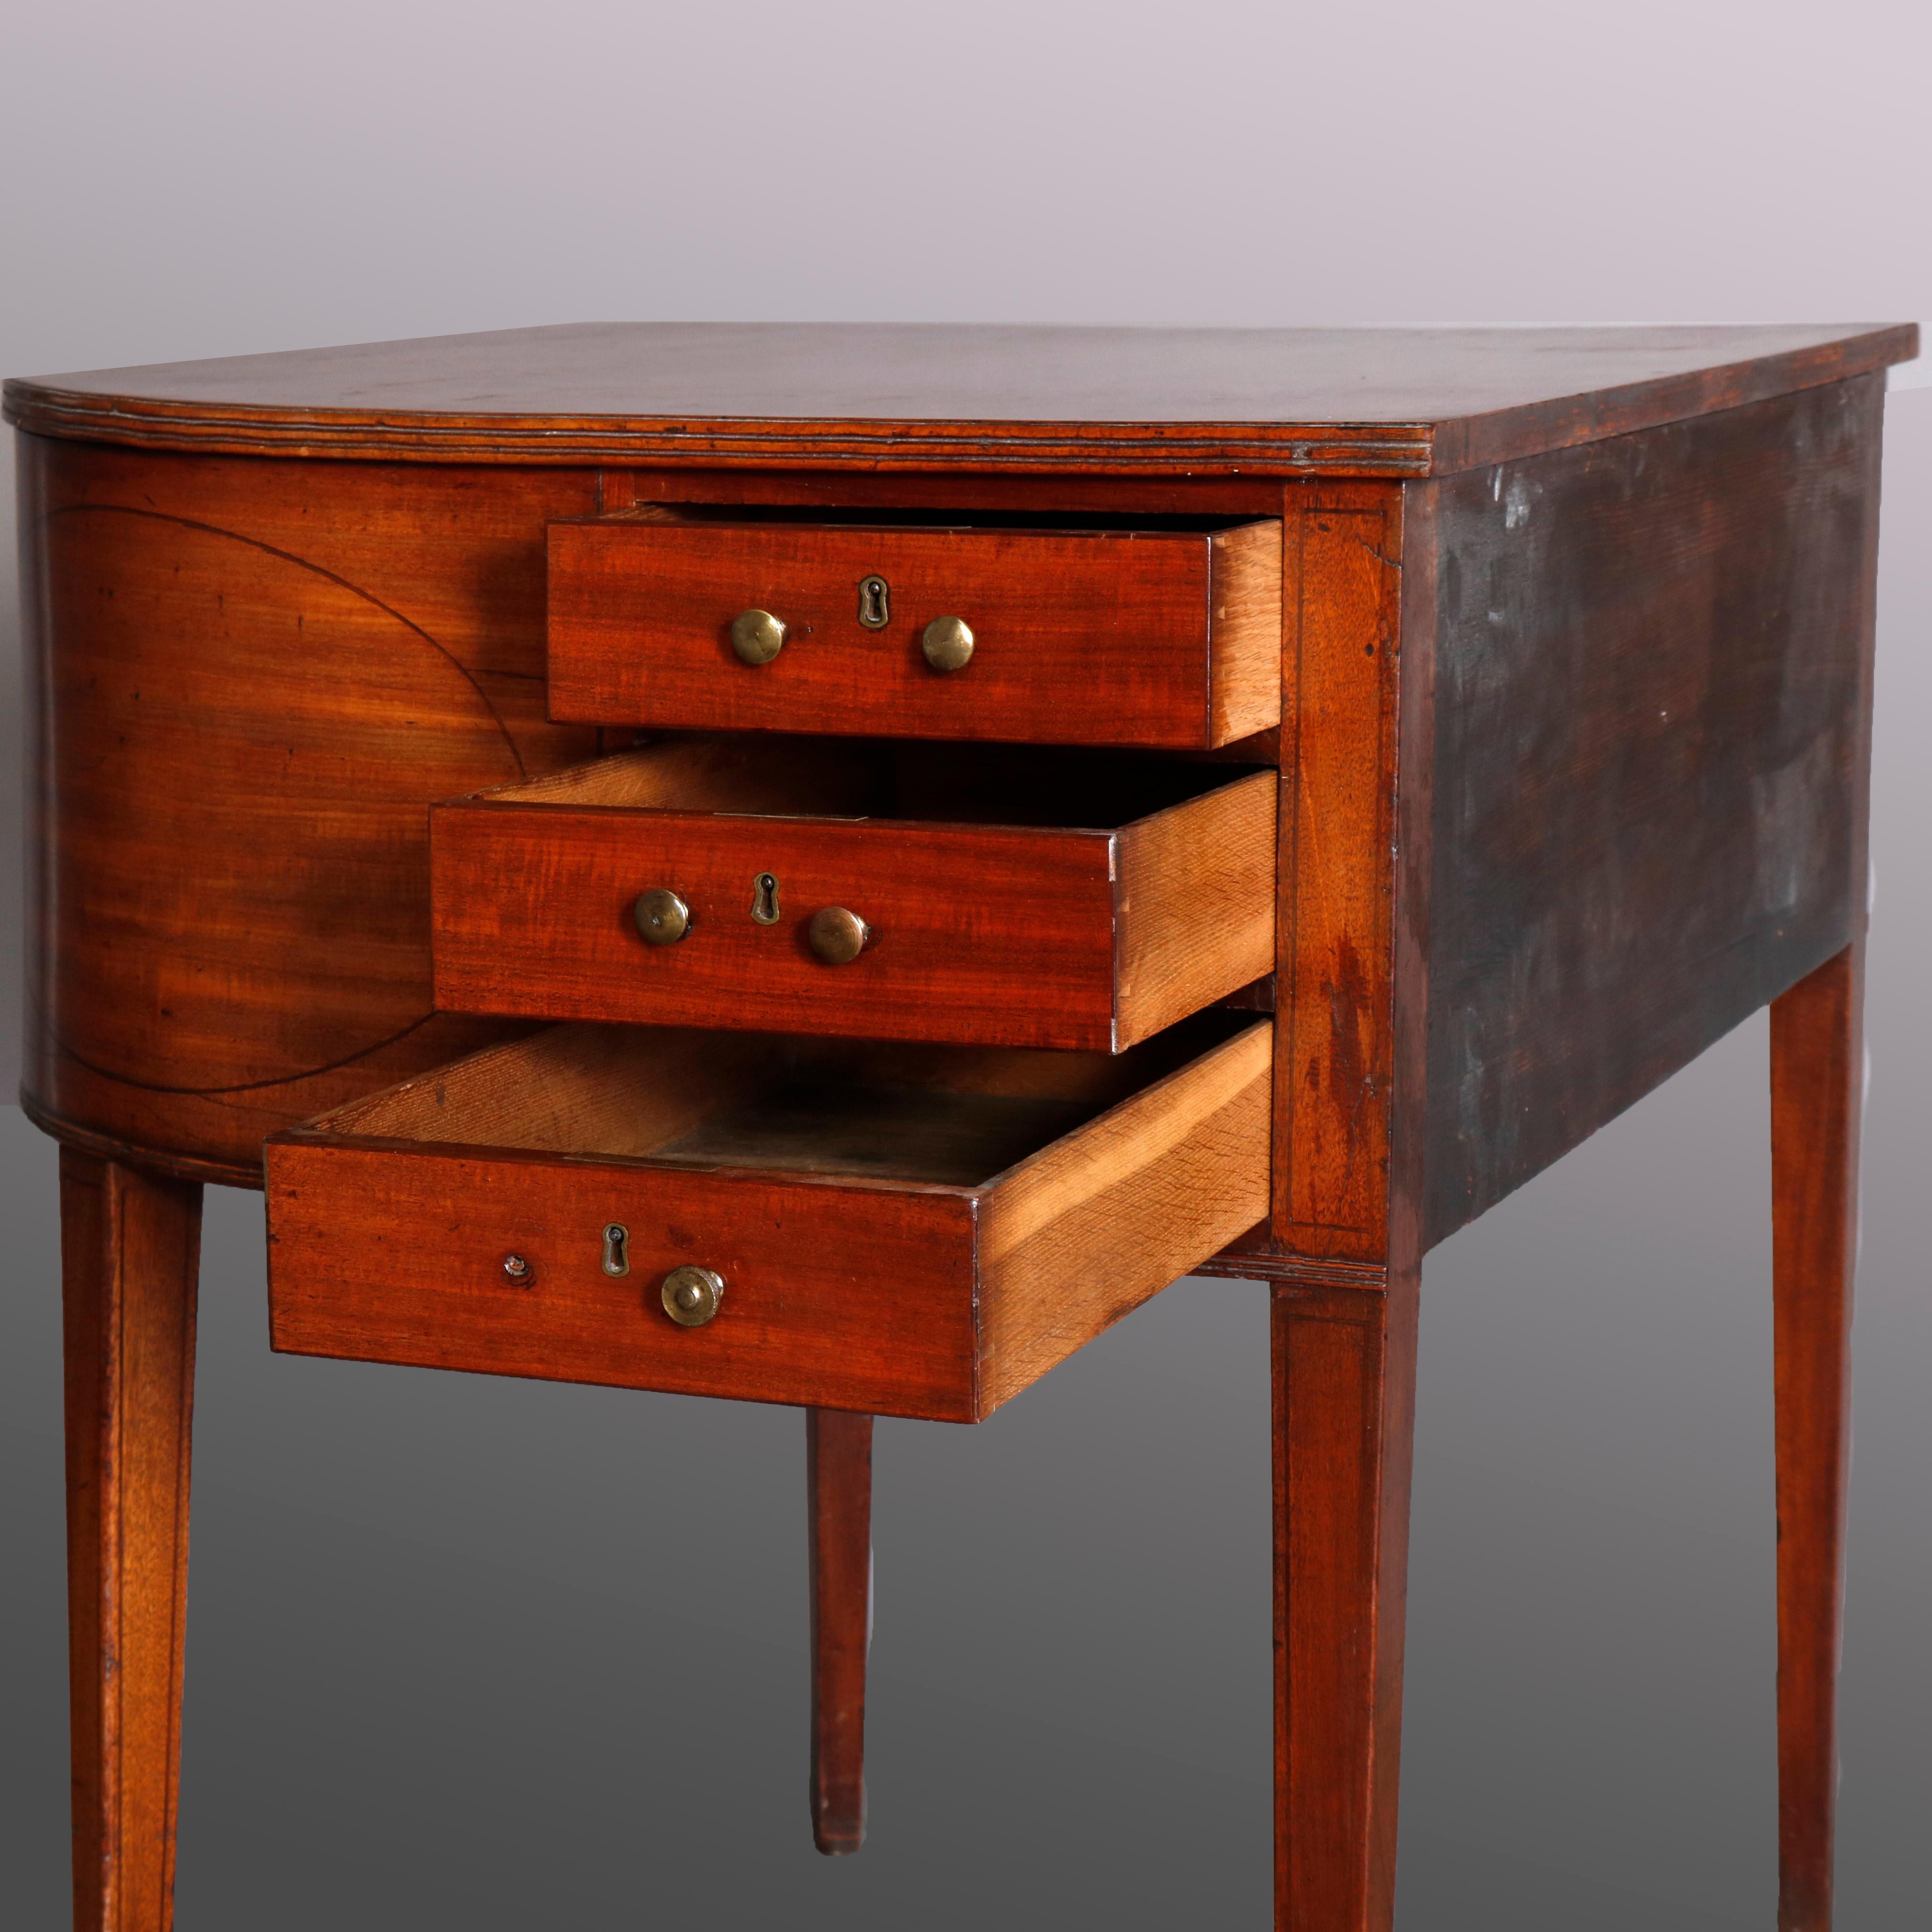 Inlay Antique Hepplewhite Style Mahogany 8-Drawer Bent Wood Rent Table, circa 1850